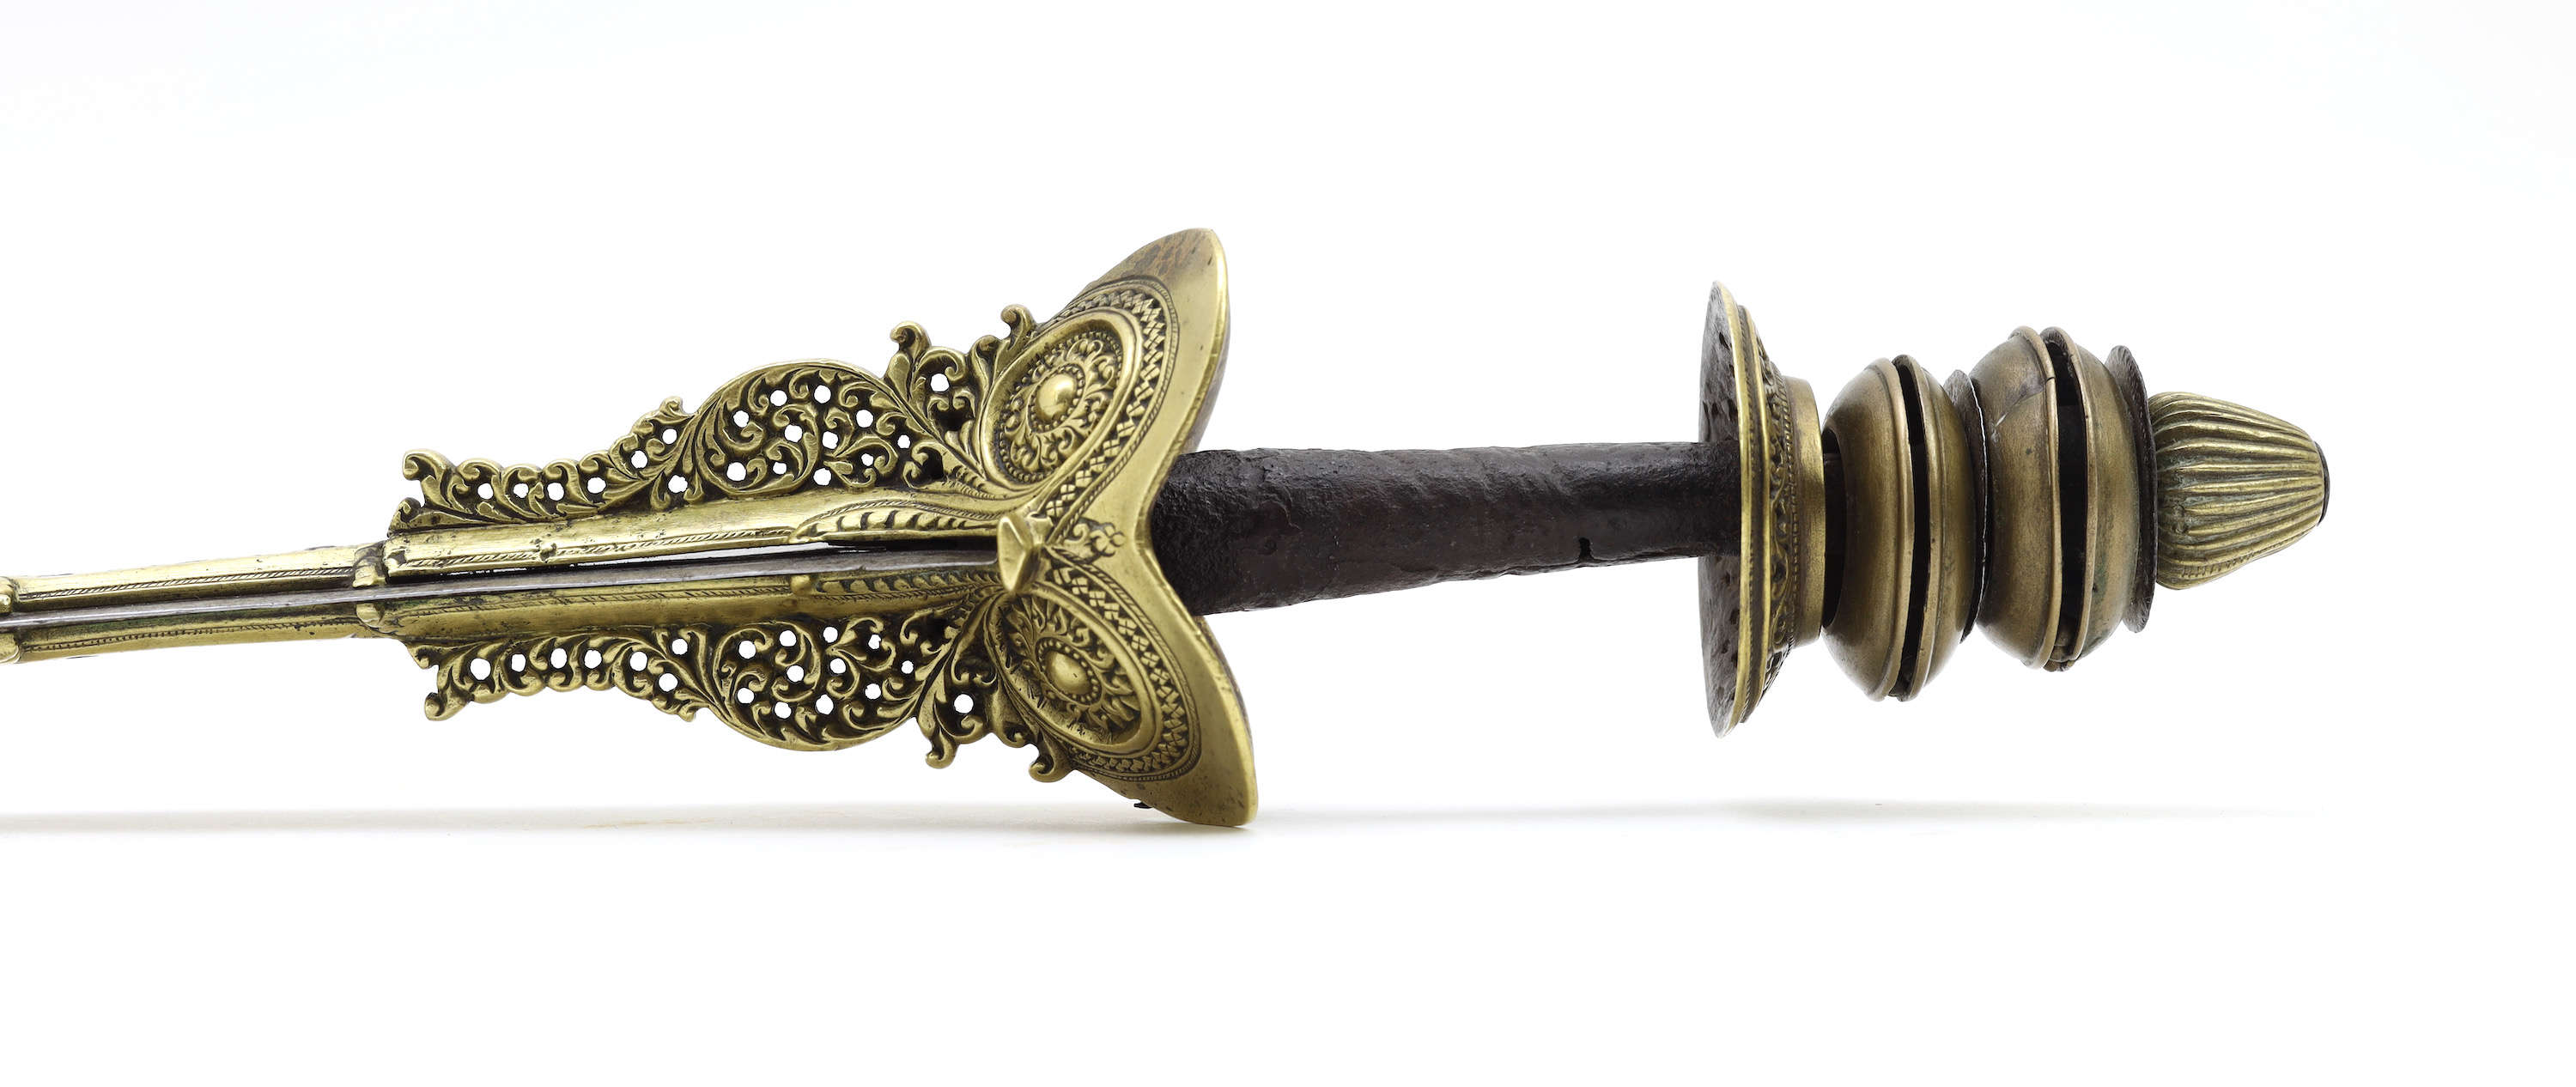 Nayar flamboyant temple sword